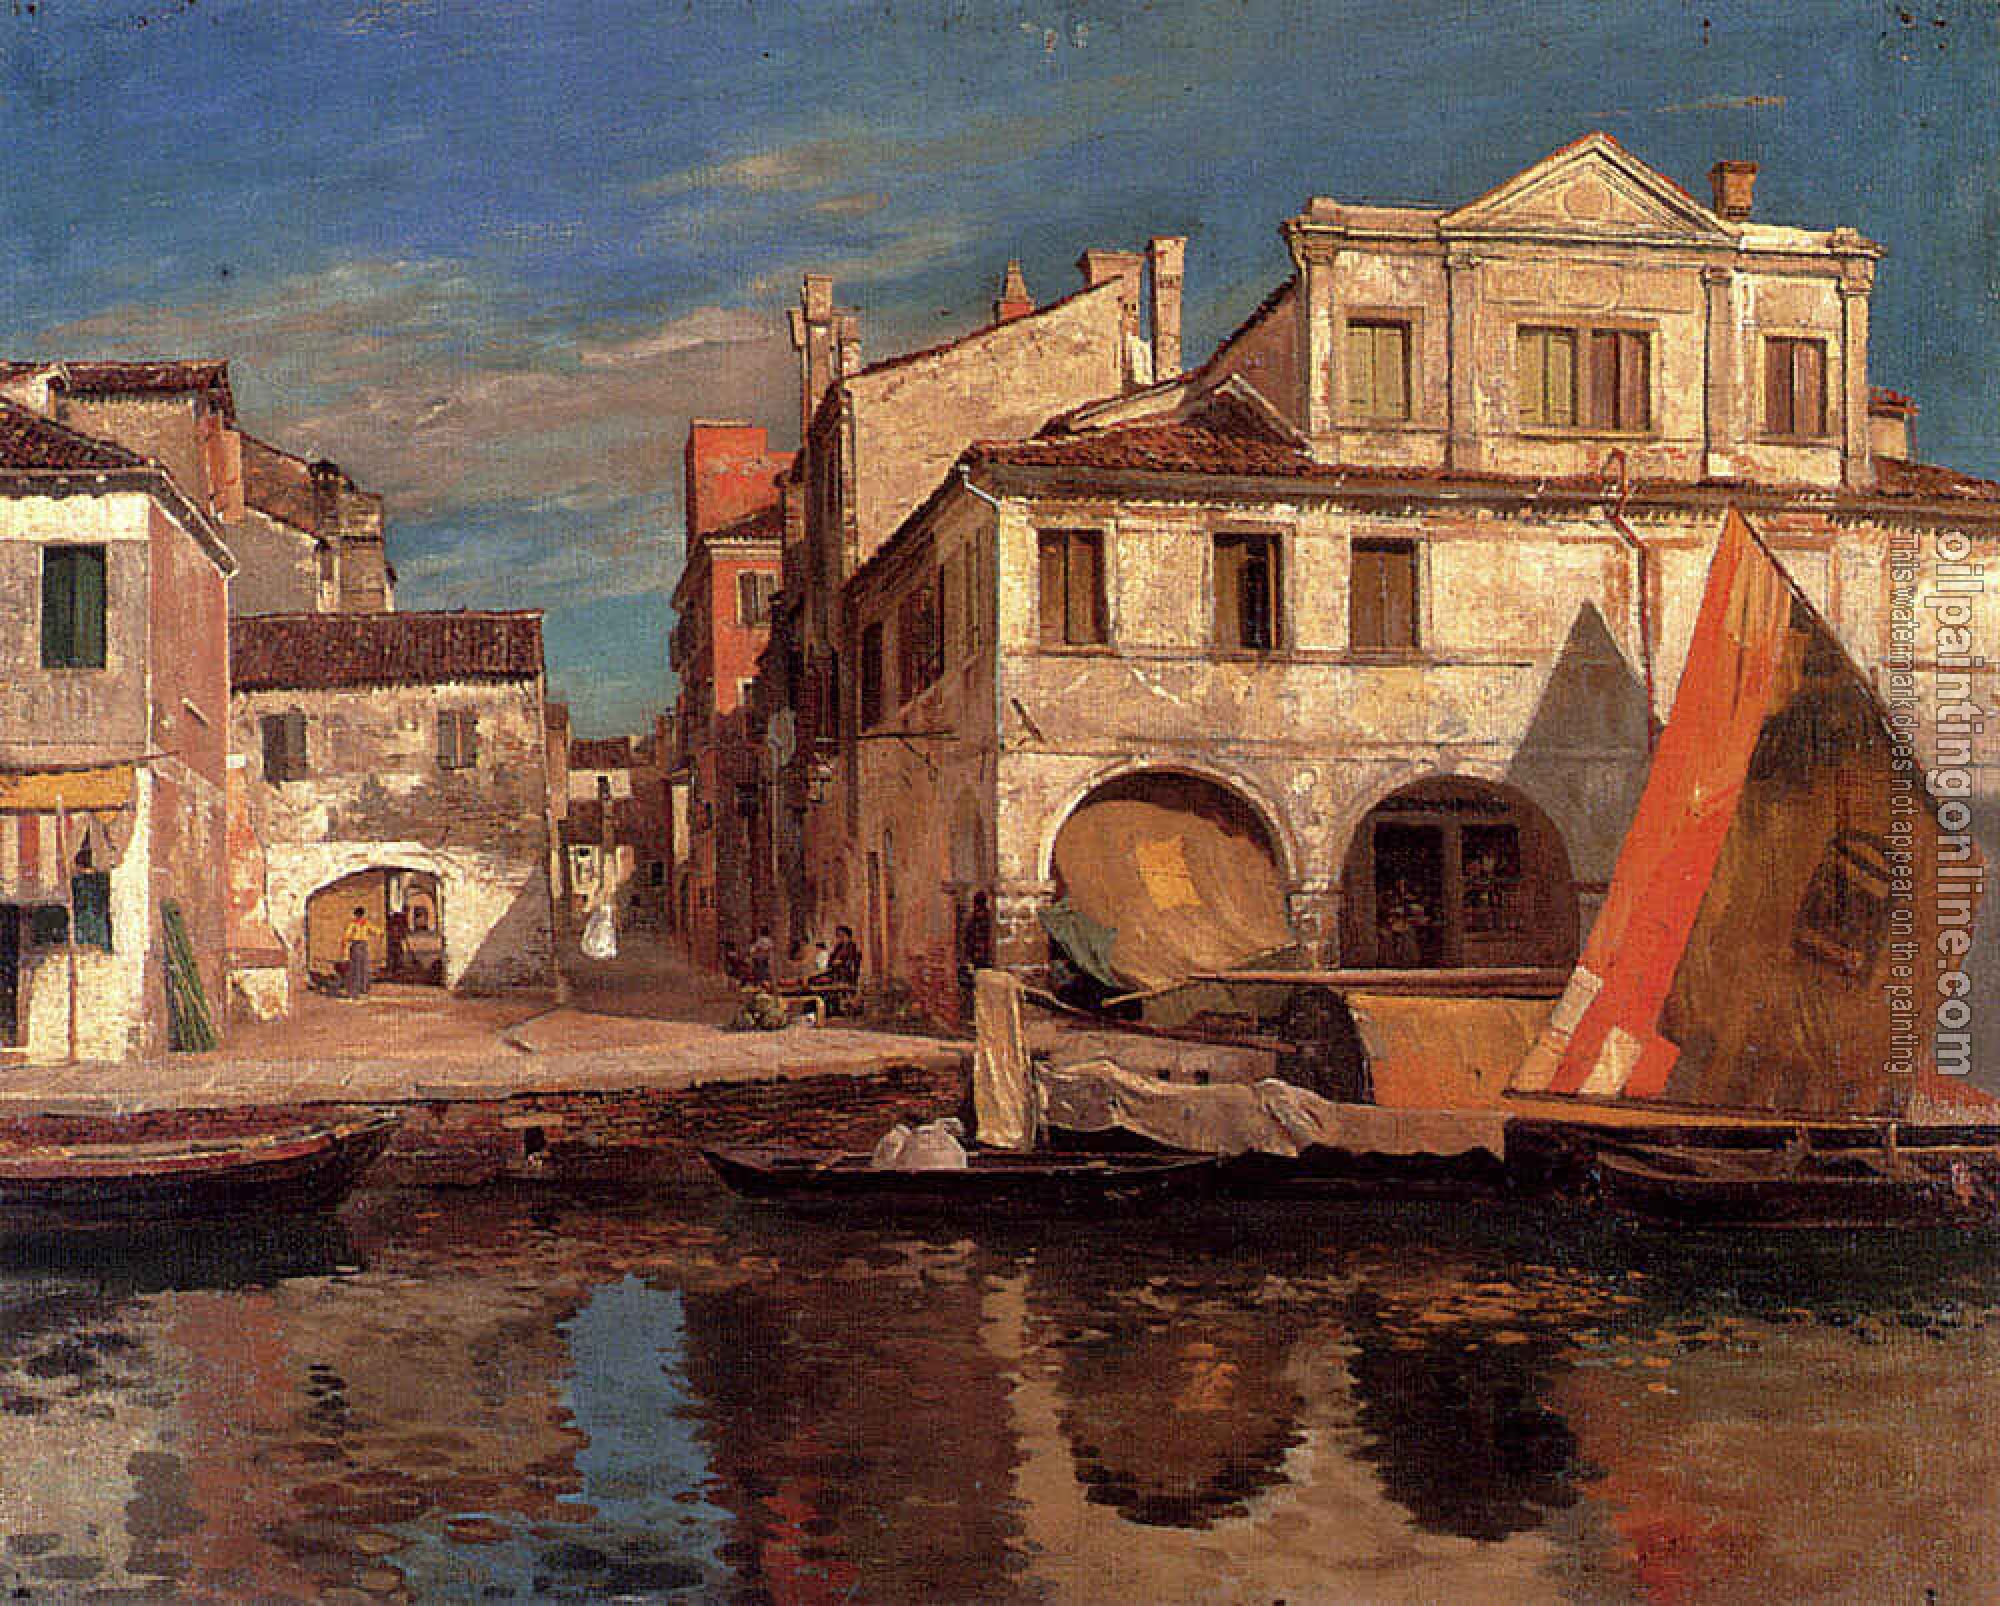 Bauernfiend, Gustav - Gustav Bauernfeind, Canal Scene in Chioggia with Bragozzo